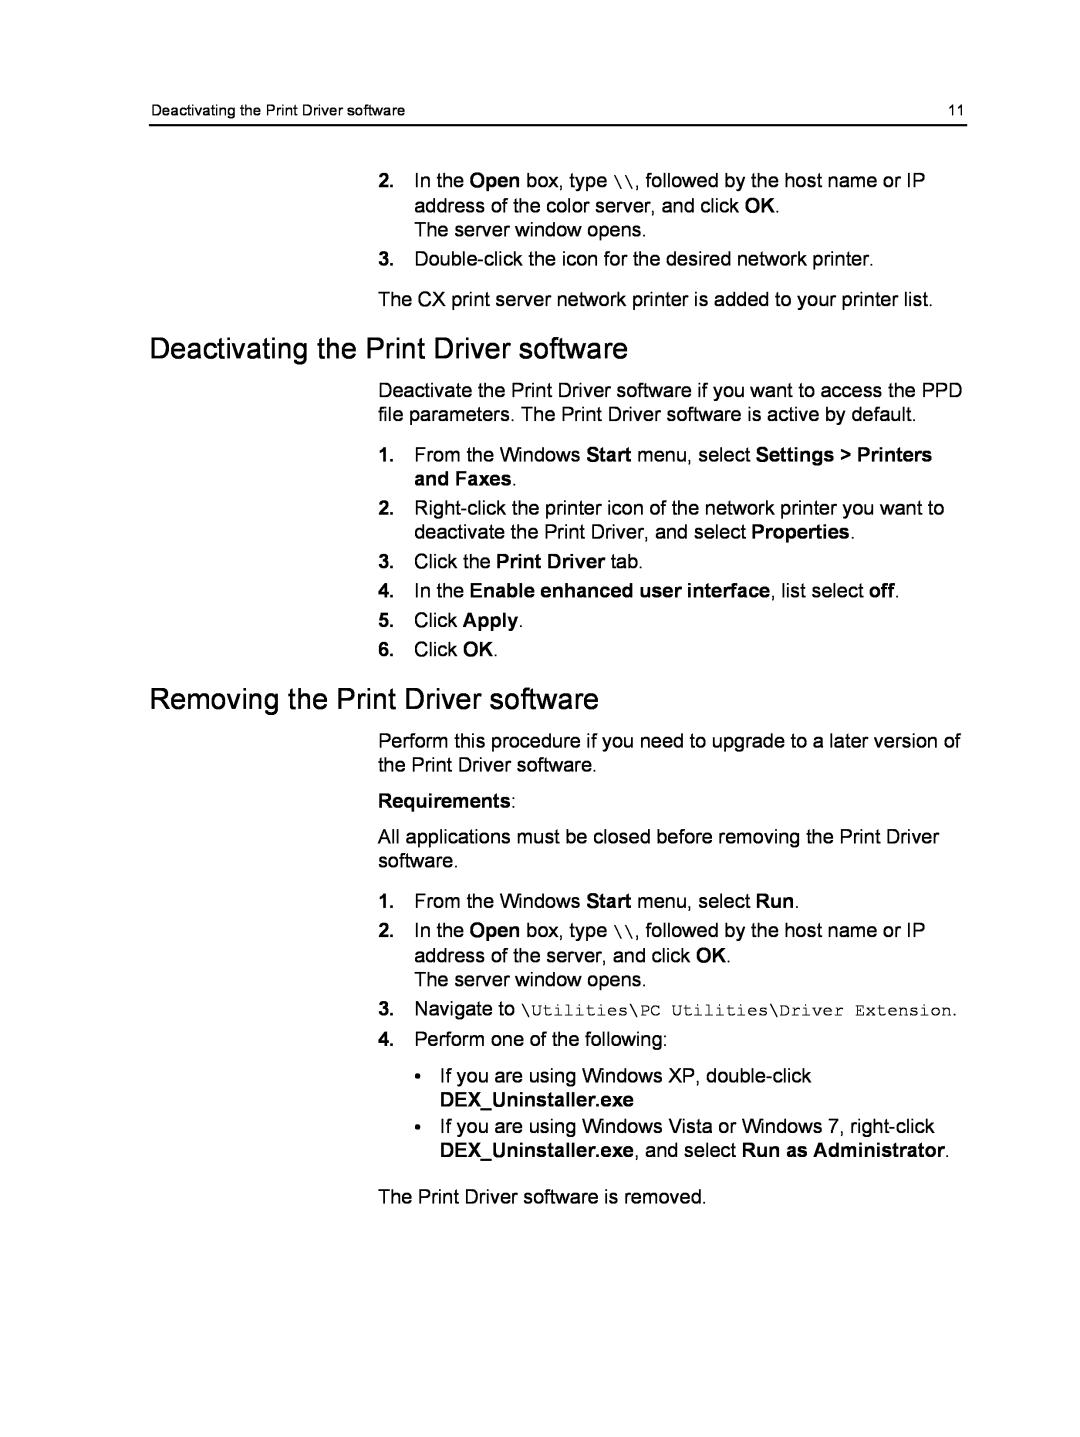 Xerox 550 Deactivating the Print Driver software, Removing the Print Driver software, Requirements, DEX_Uninstaller.exe 